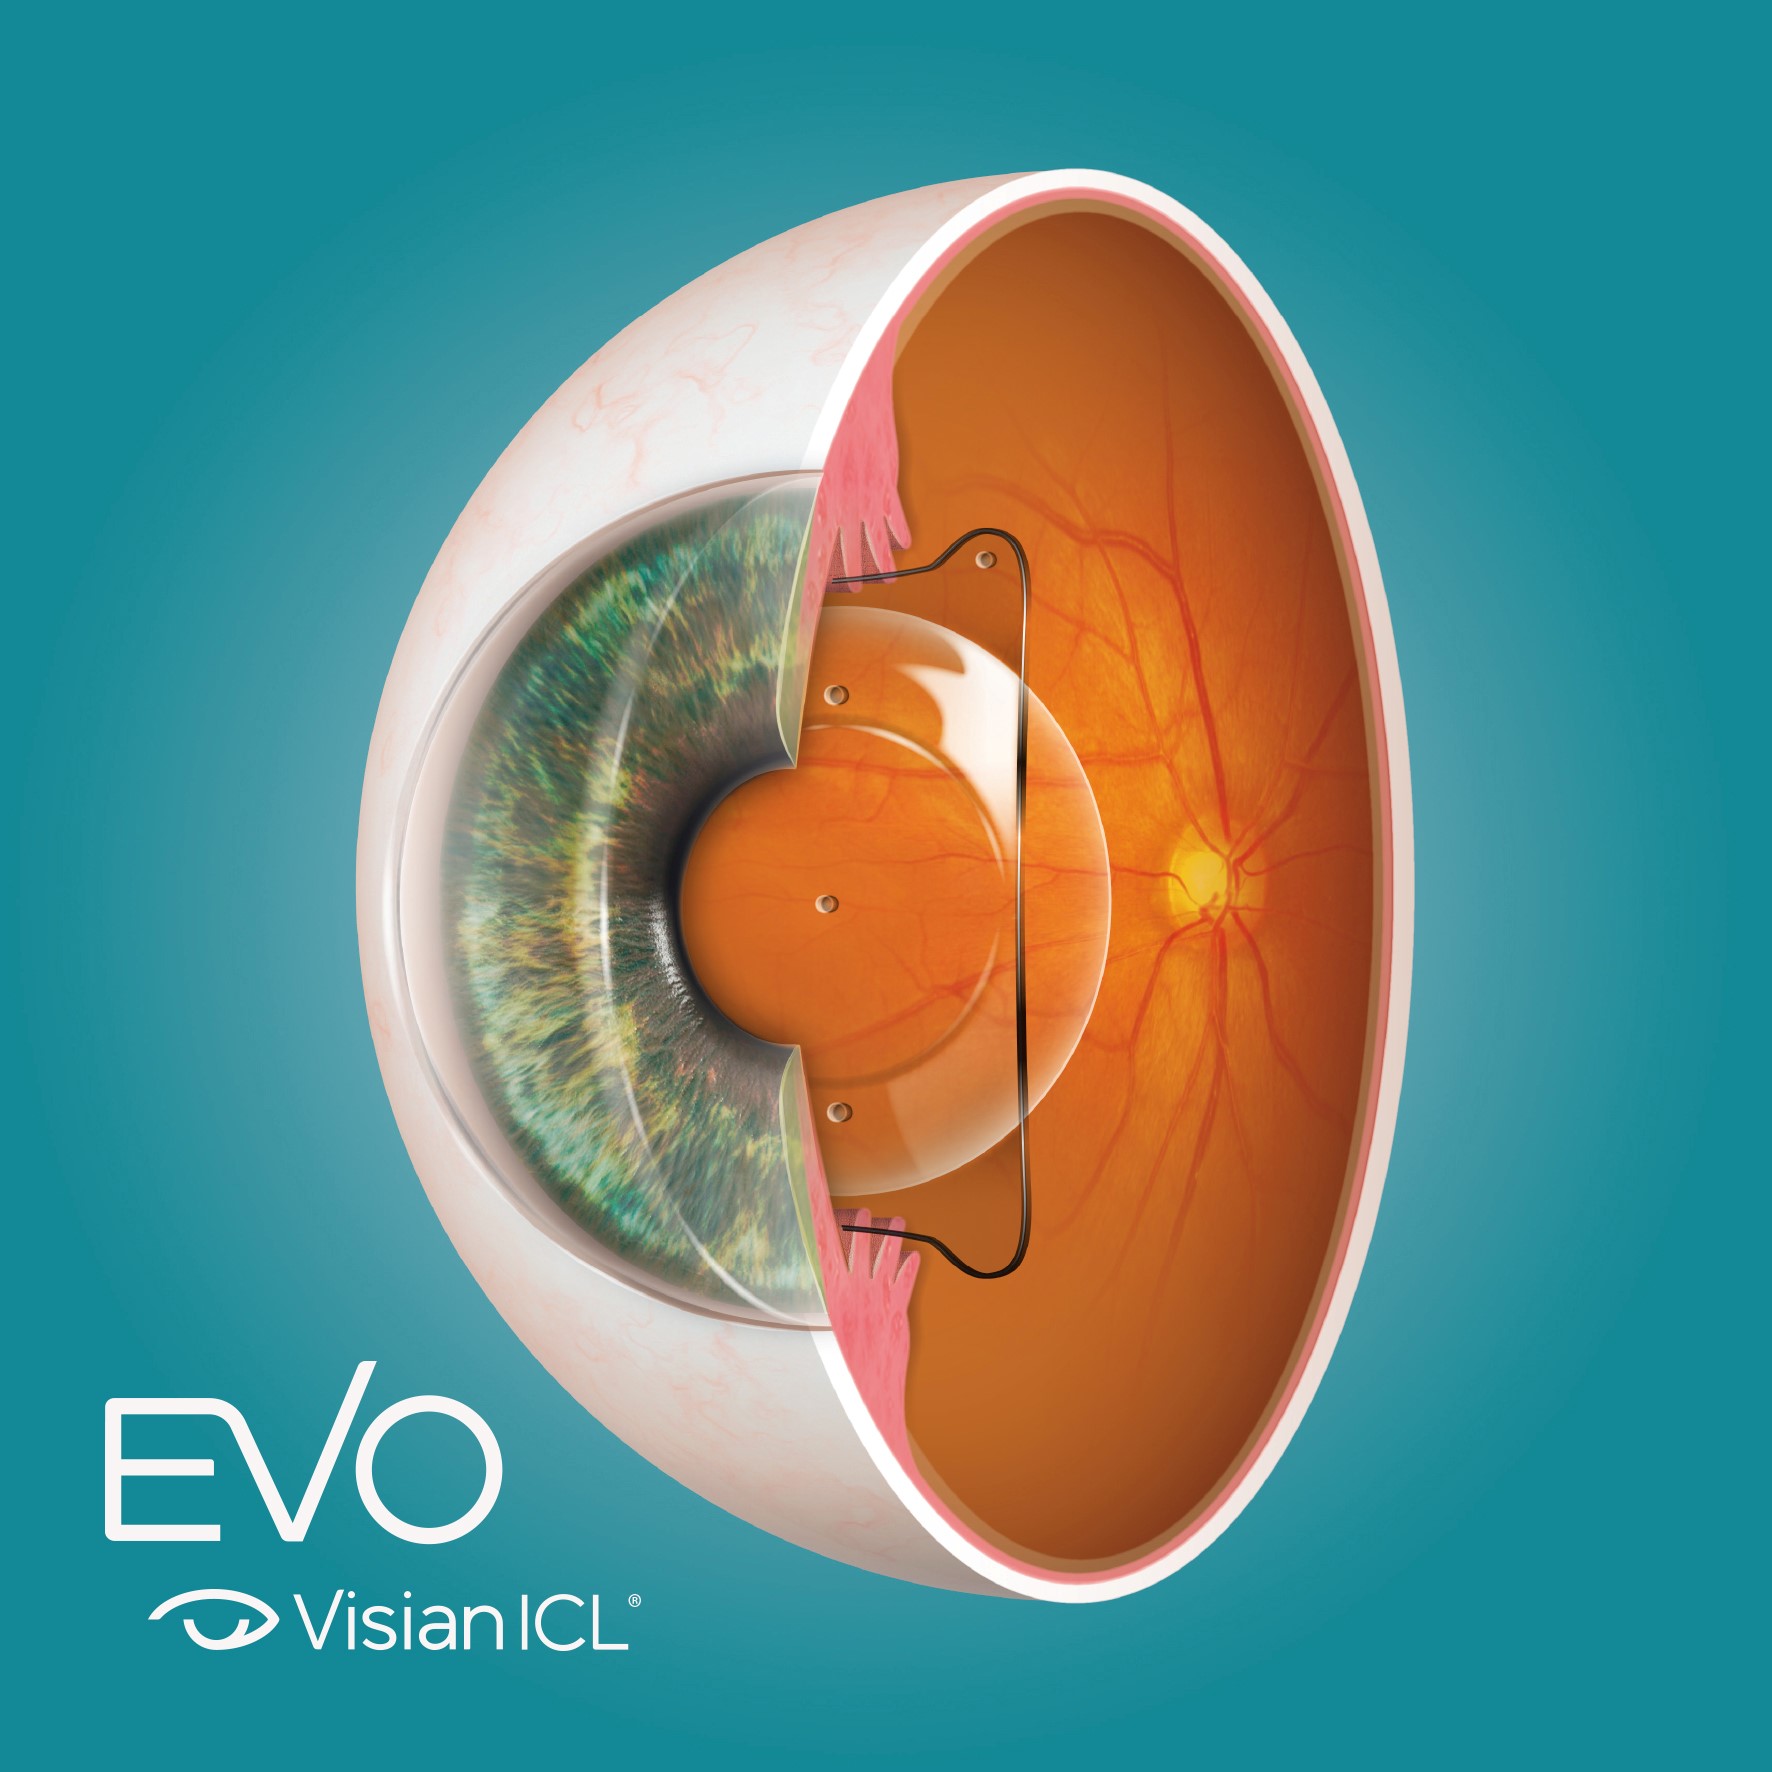 EVO Visian ICL en ojo anatómico